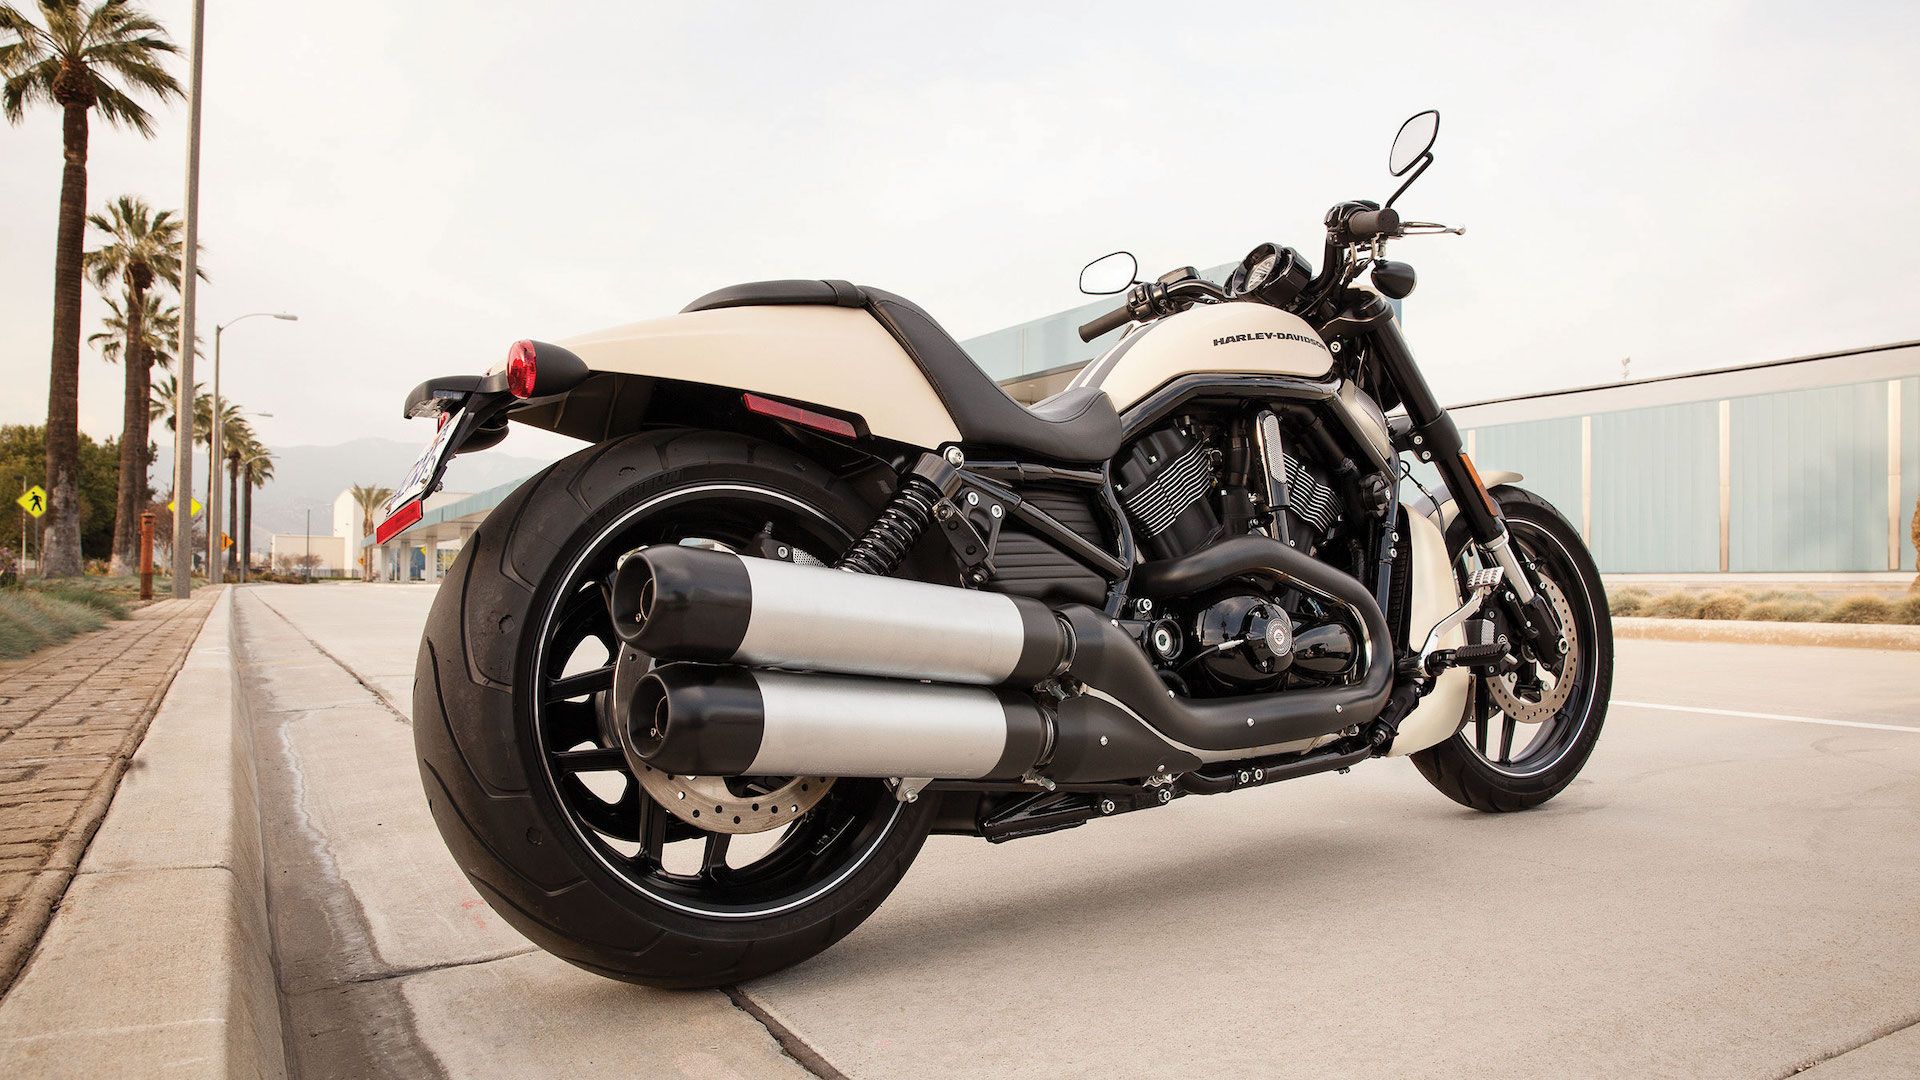 2014 Harley-Davidson Night Rod Special